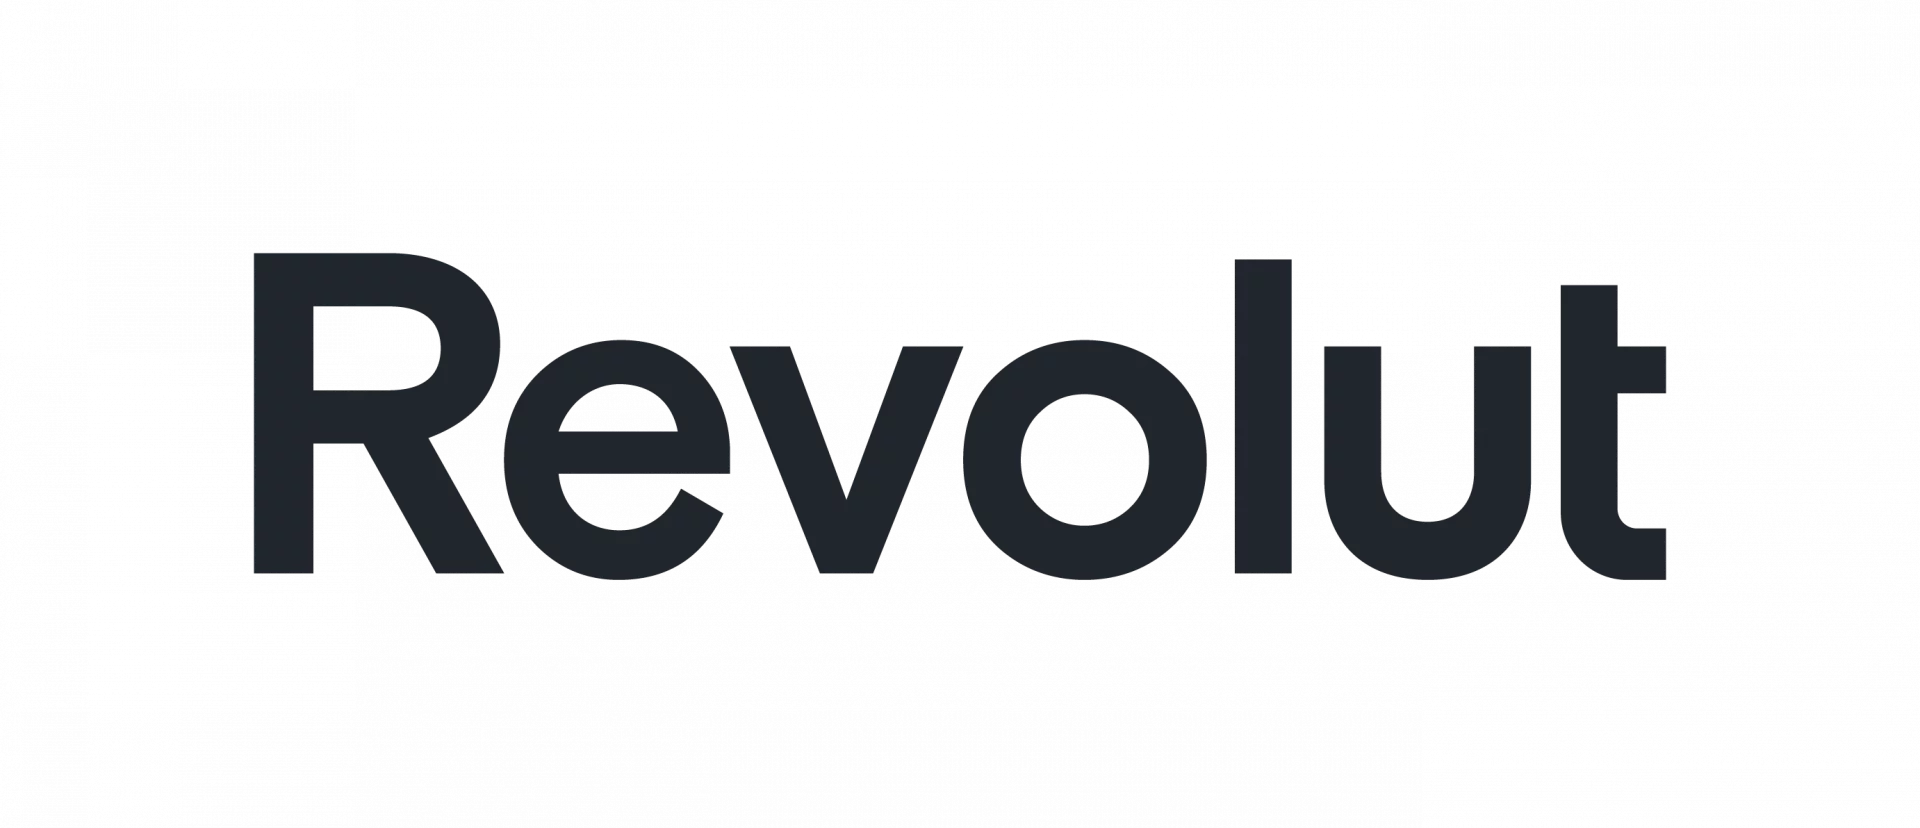 revolut-logo copy